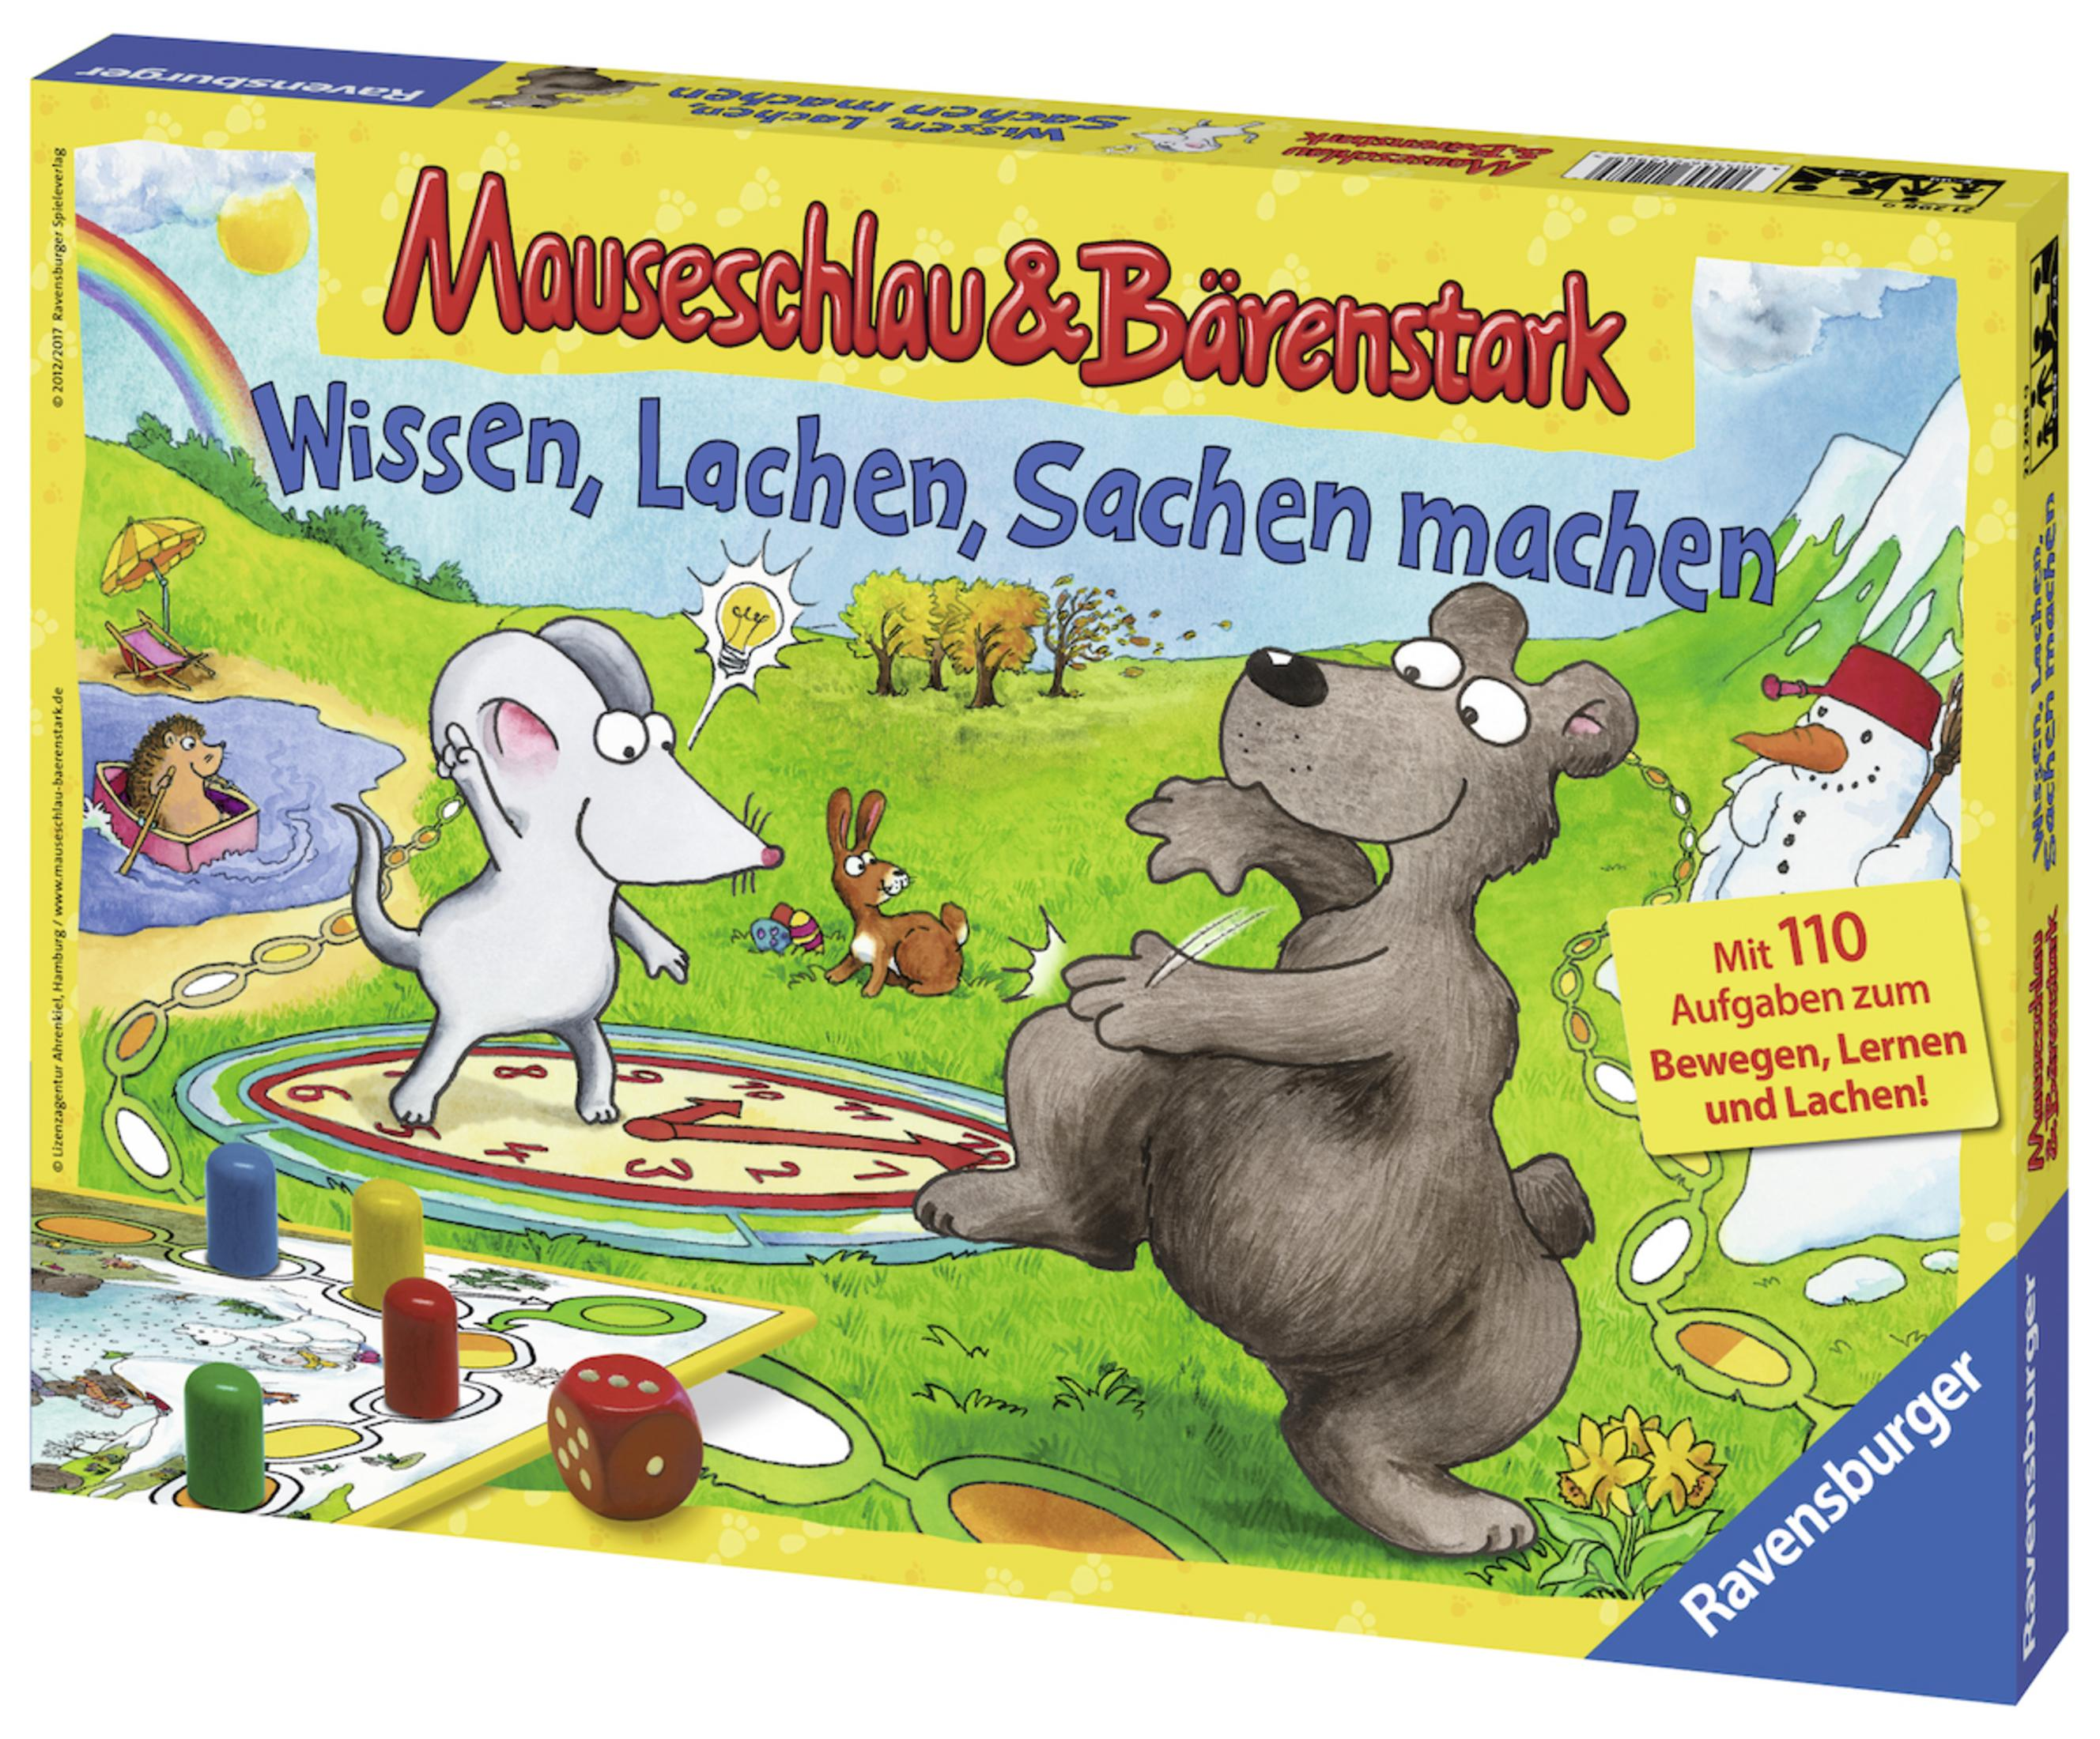 RAVENSBURGER 21298 WIS & Lustige BÄRENSTARK MAUSESCHLAU Kinderspiele